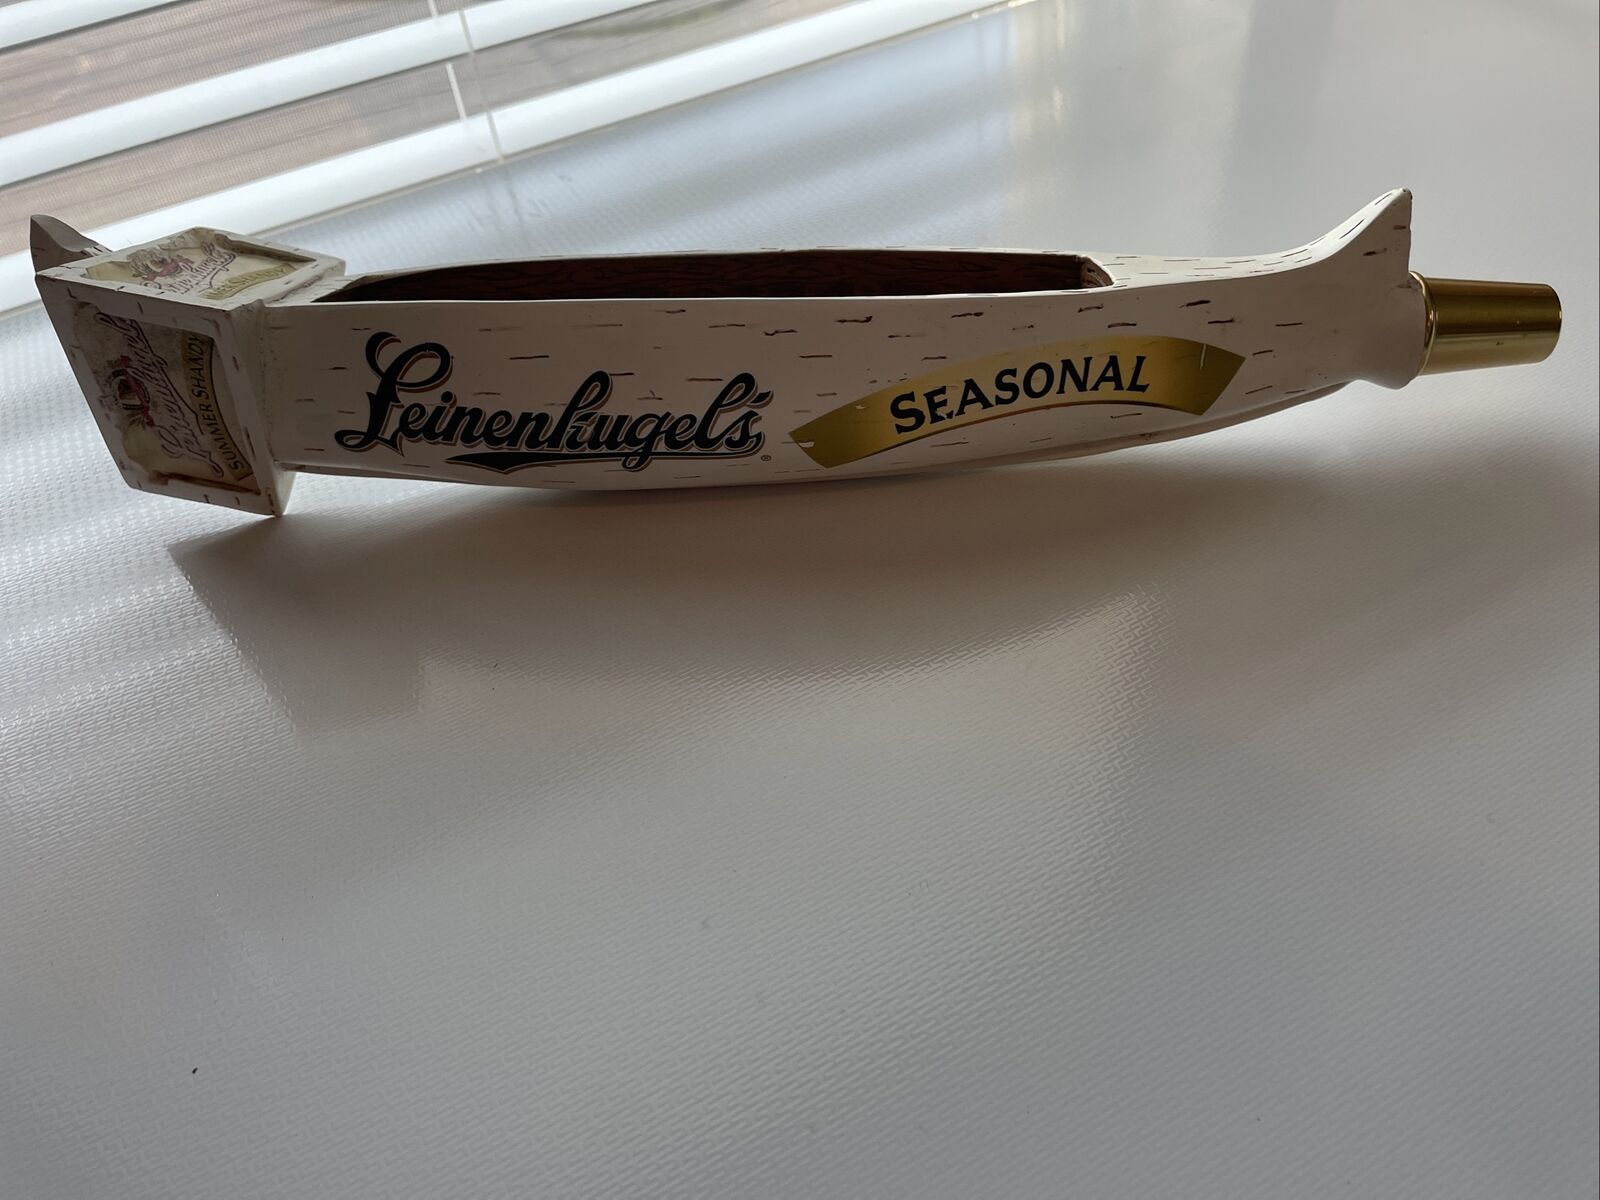 Leinenkugel’s seasonal Canoe Beer Tap Handle Keg 1 Summer Shandy LABEL included